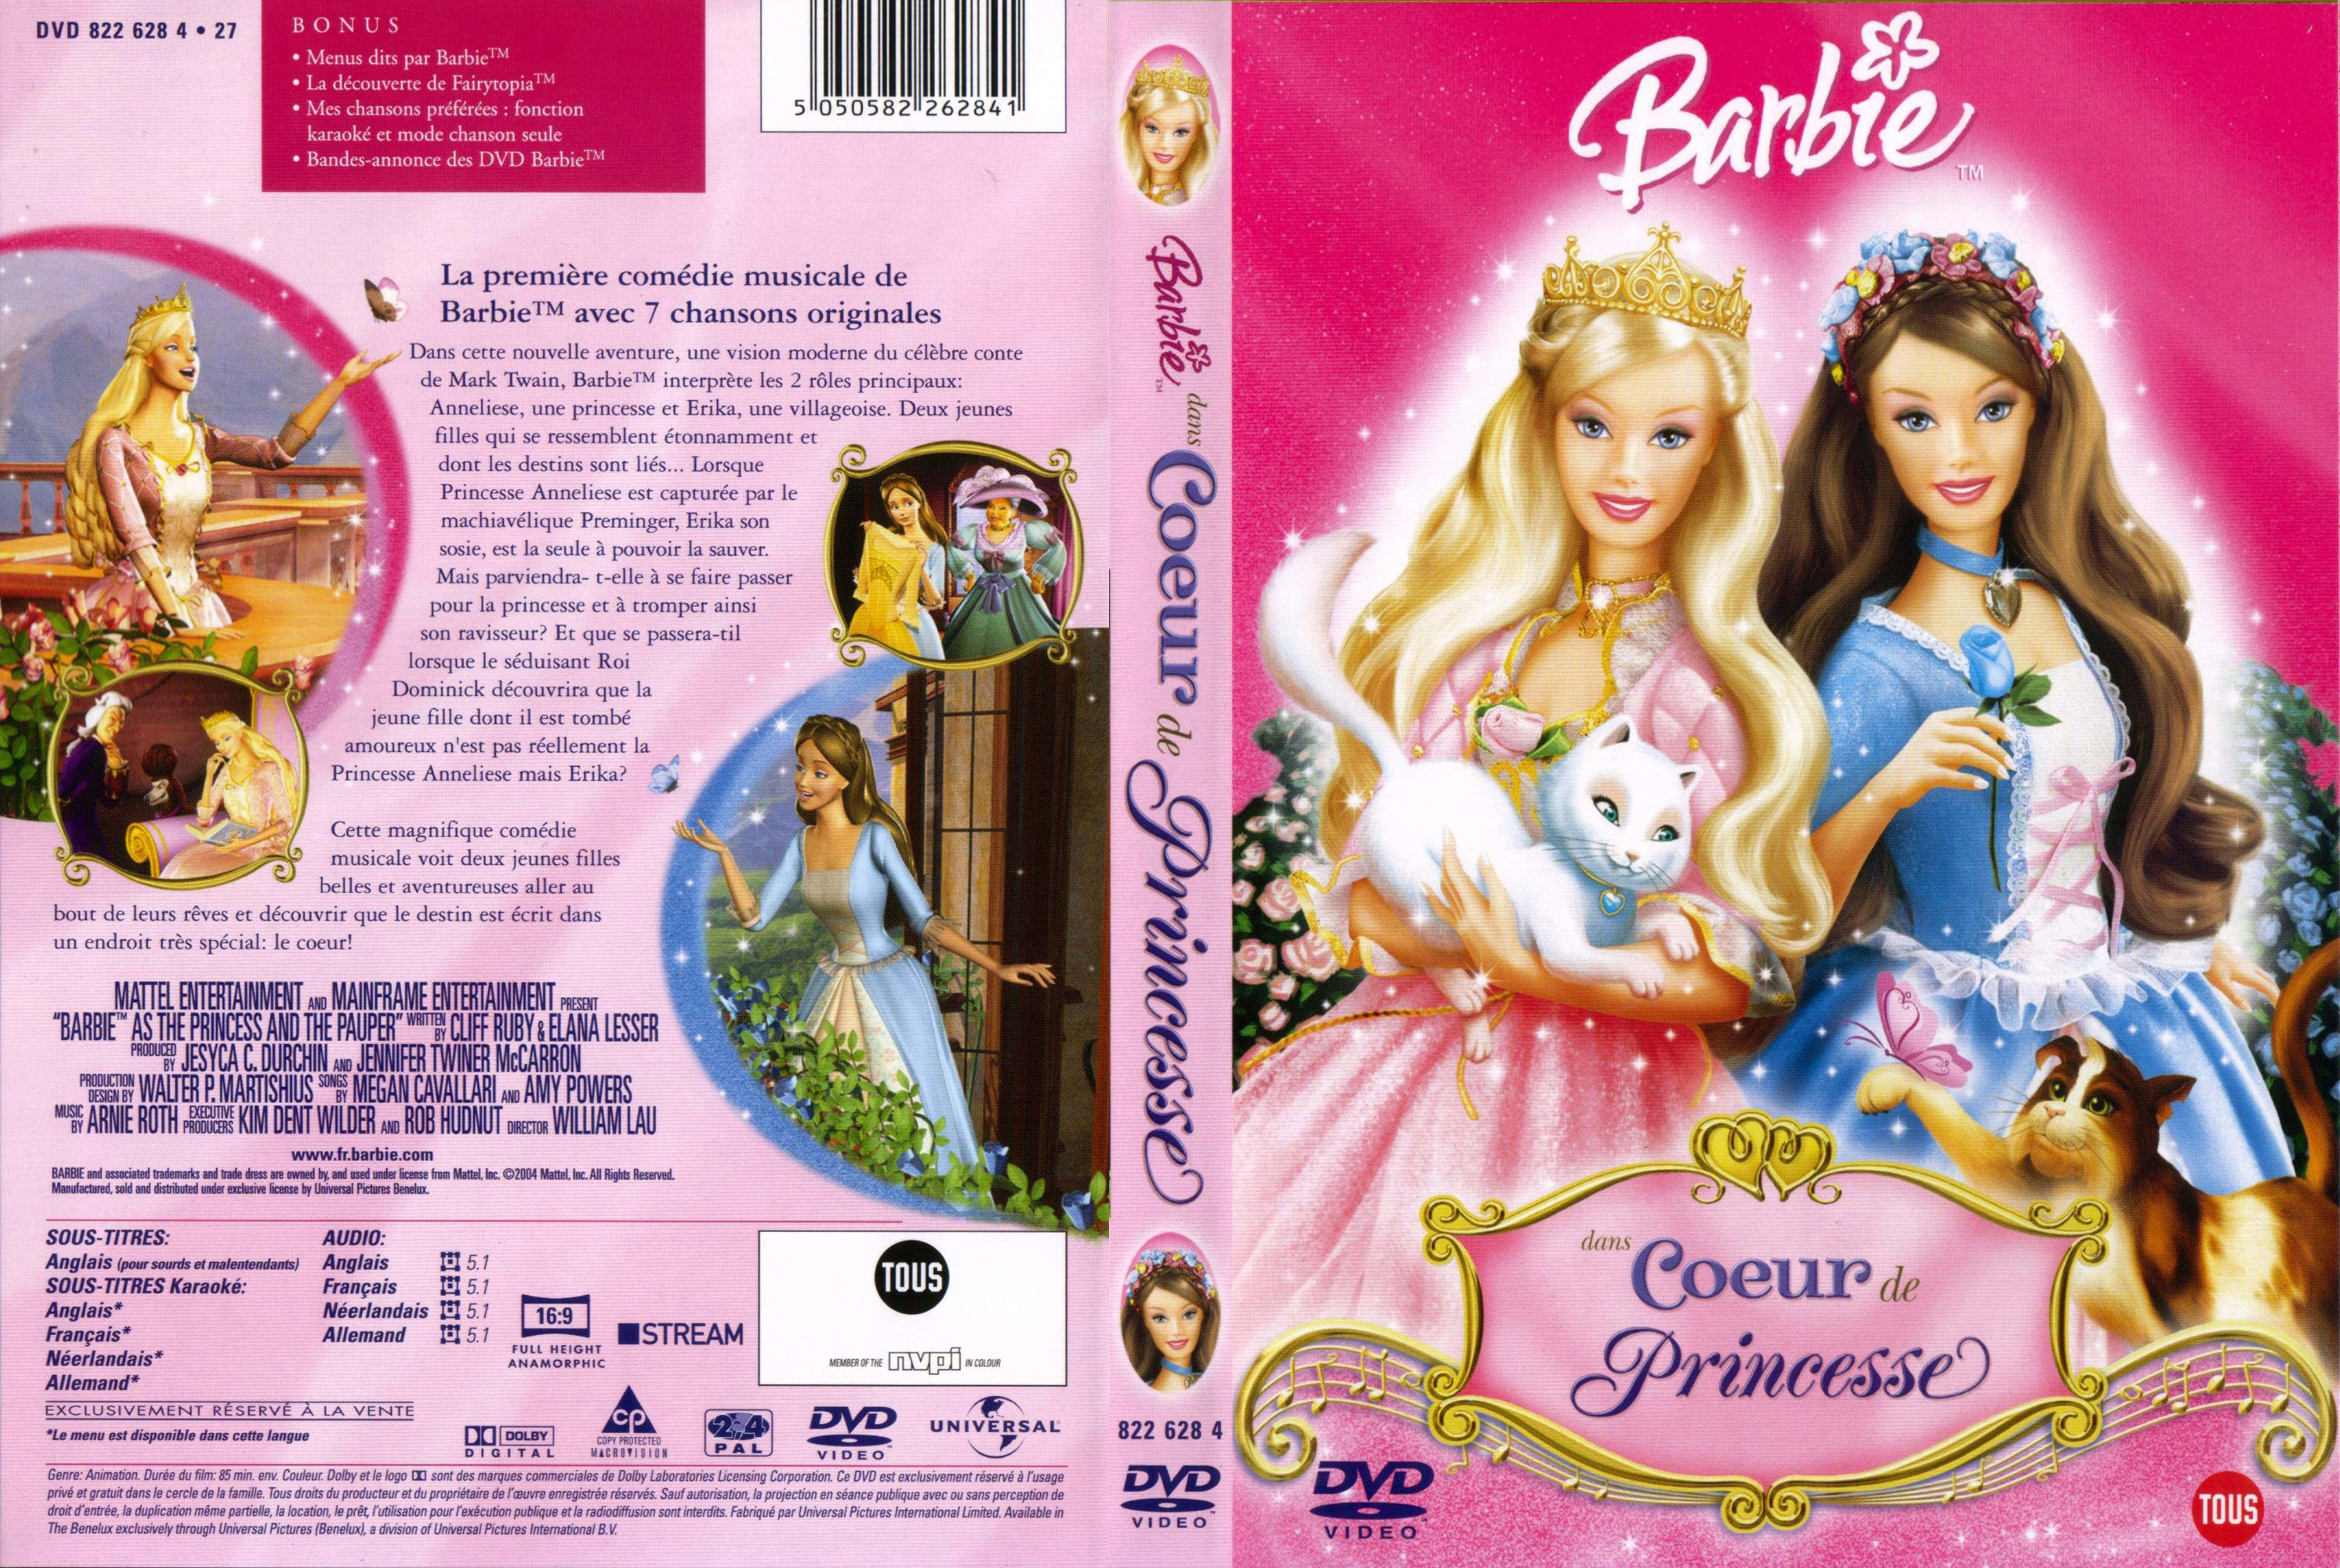 Jaquette DVD Barbie coeur de princesse